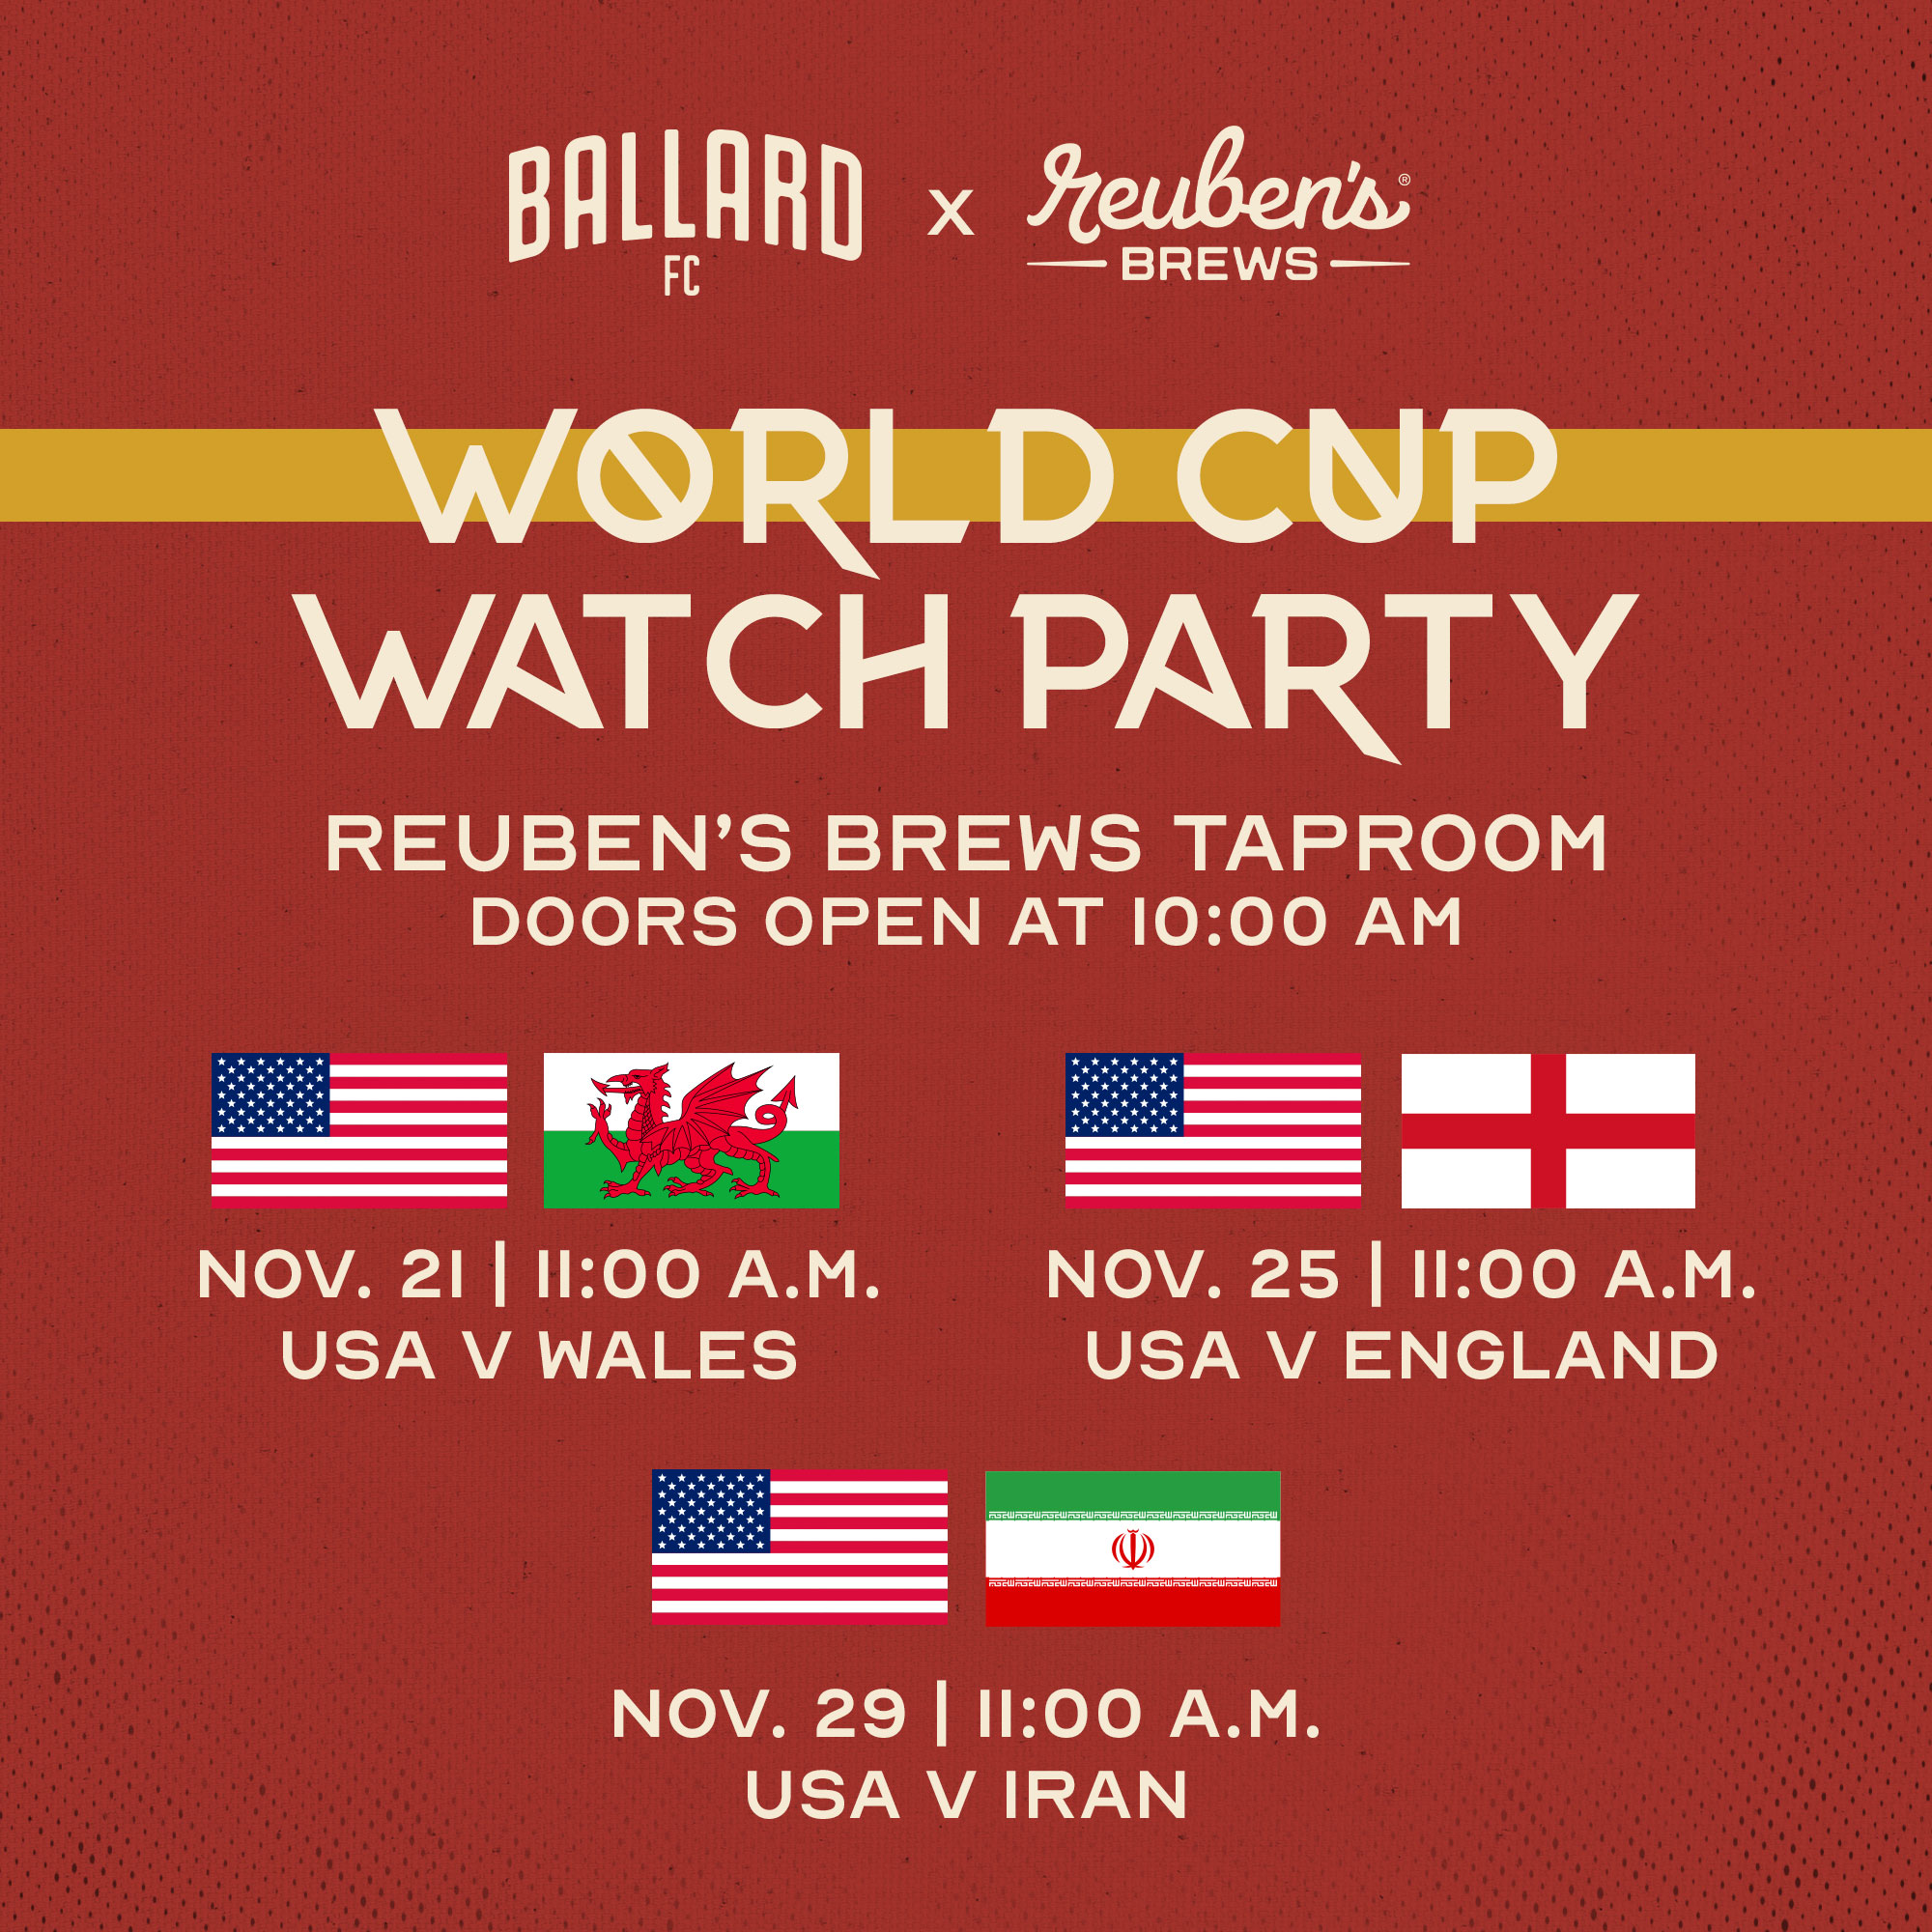 Ballard FC and Reuben's Brews Team Up to Host World Cup Watch Parties featured image